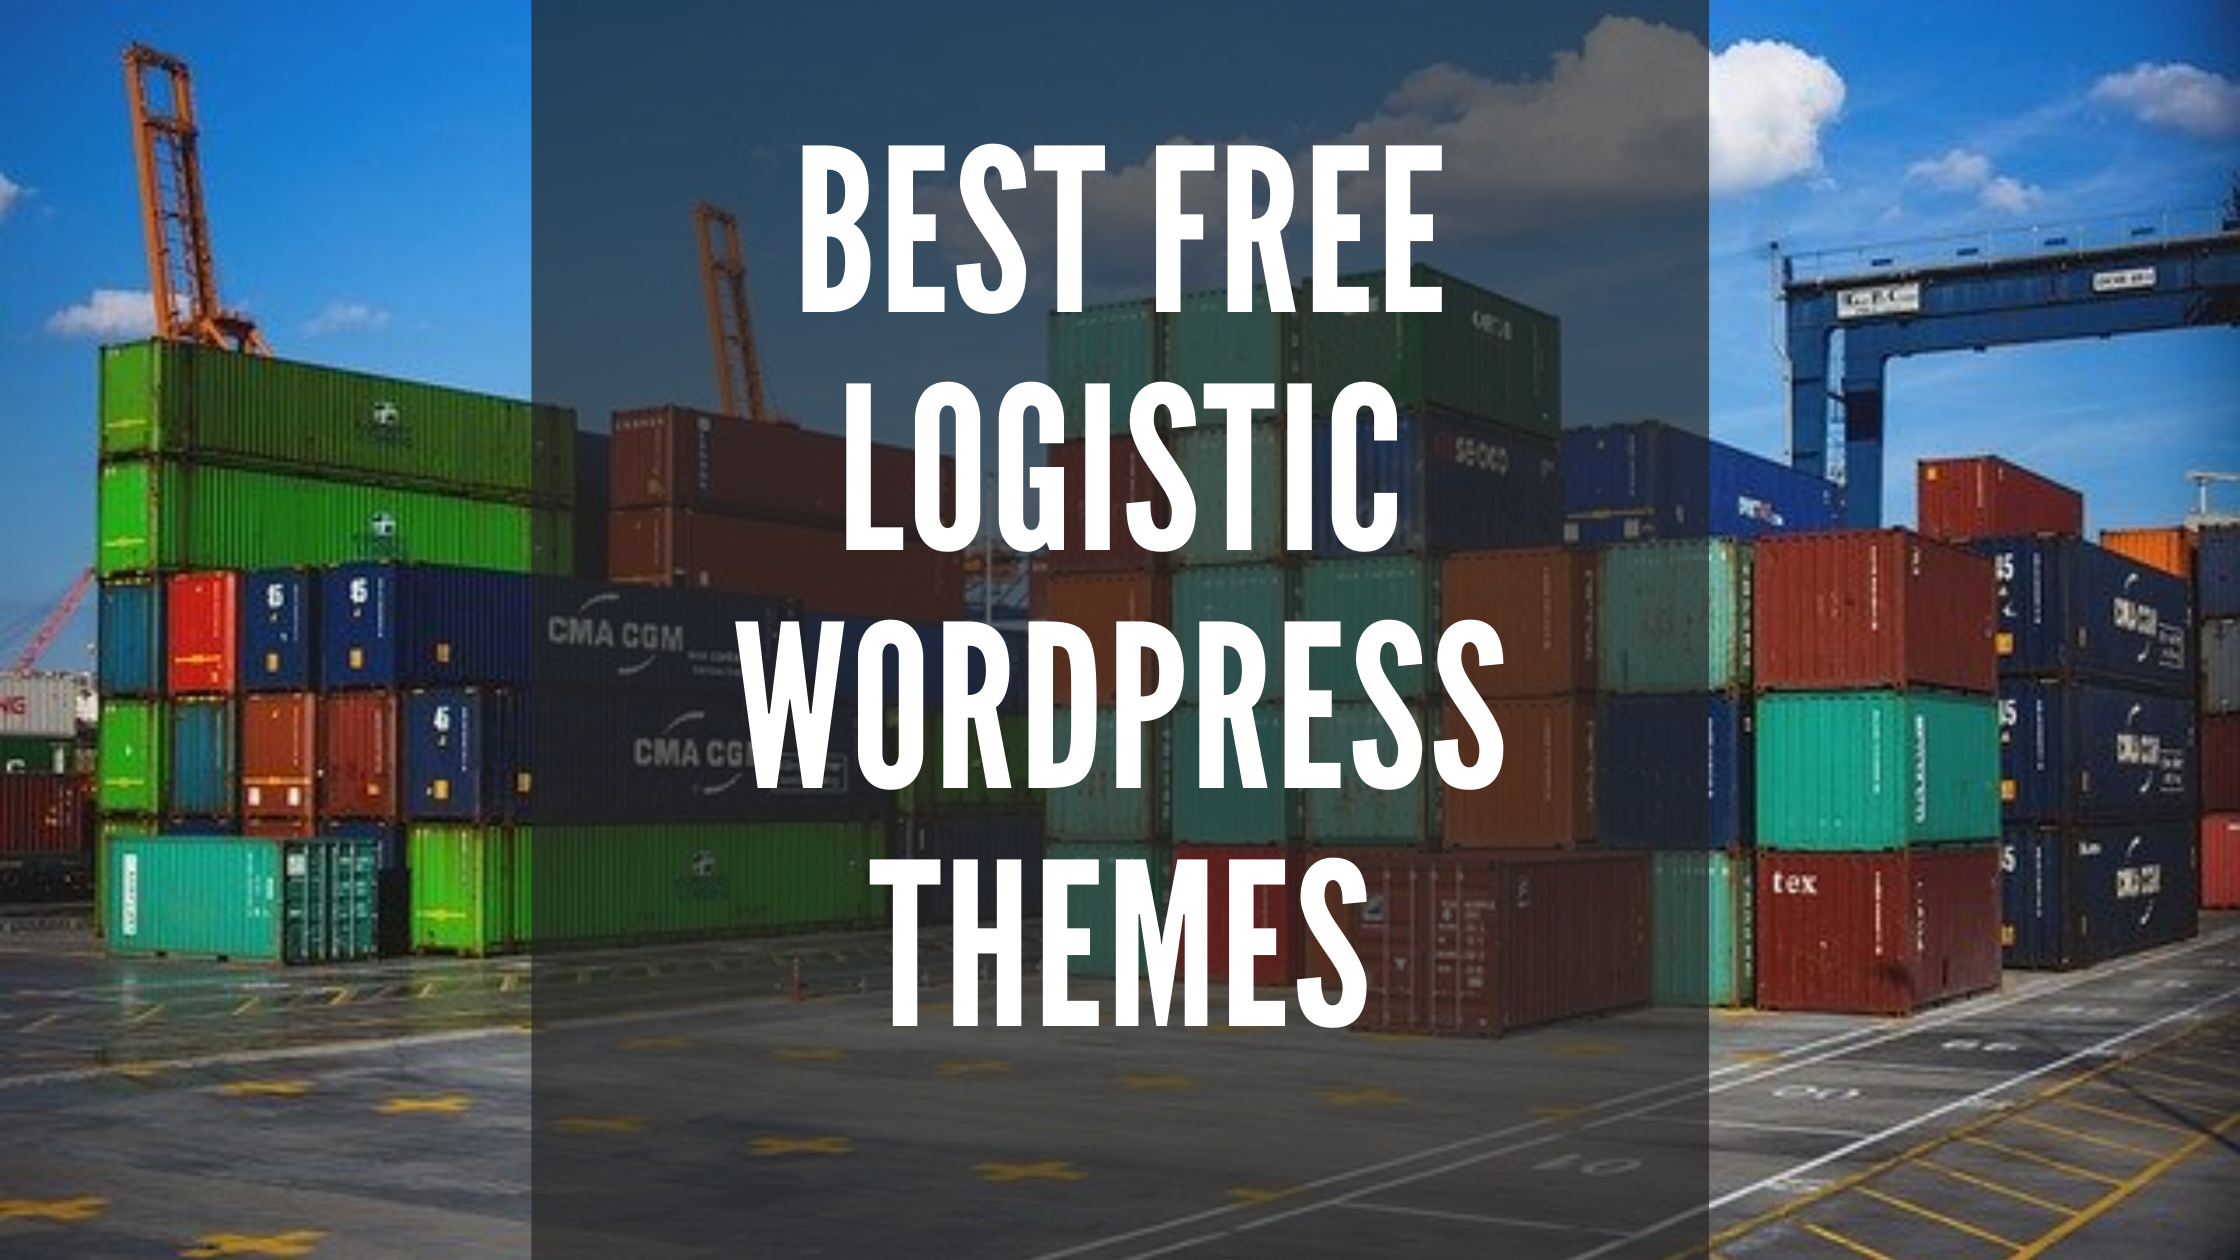 Best Free Logistic WordPress themes